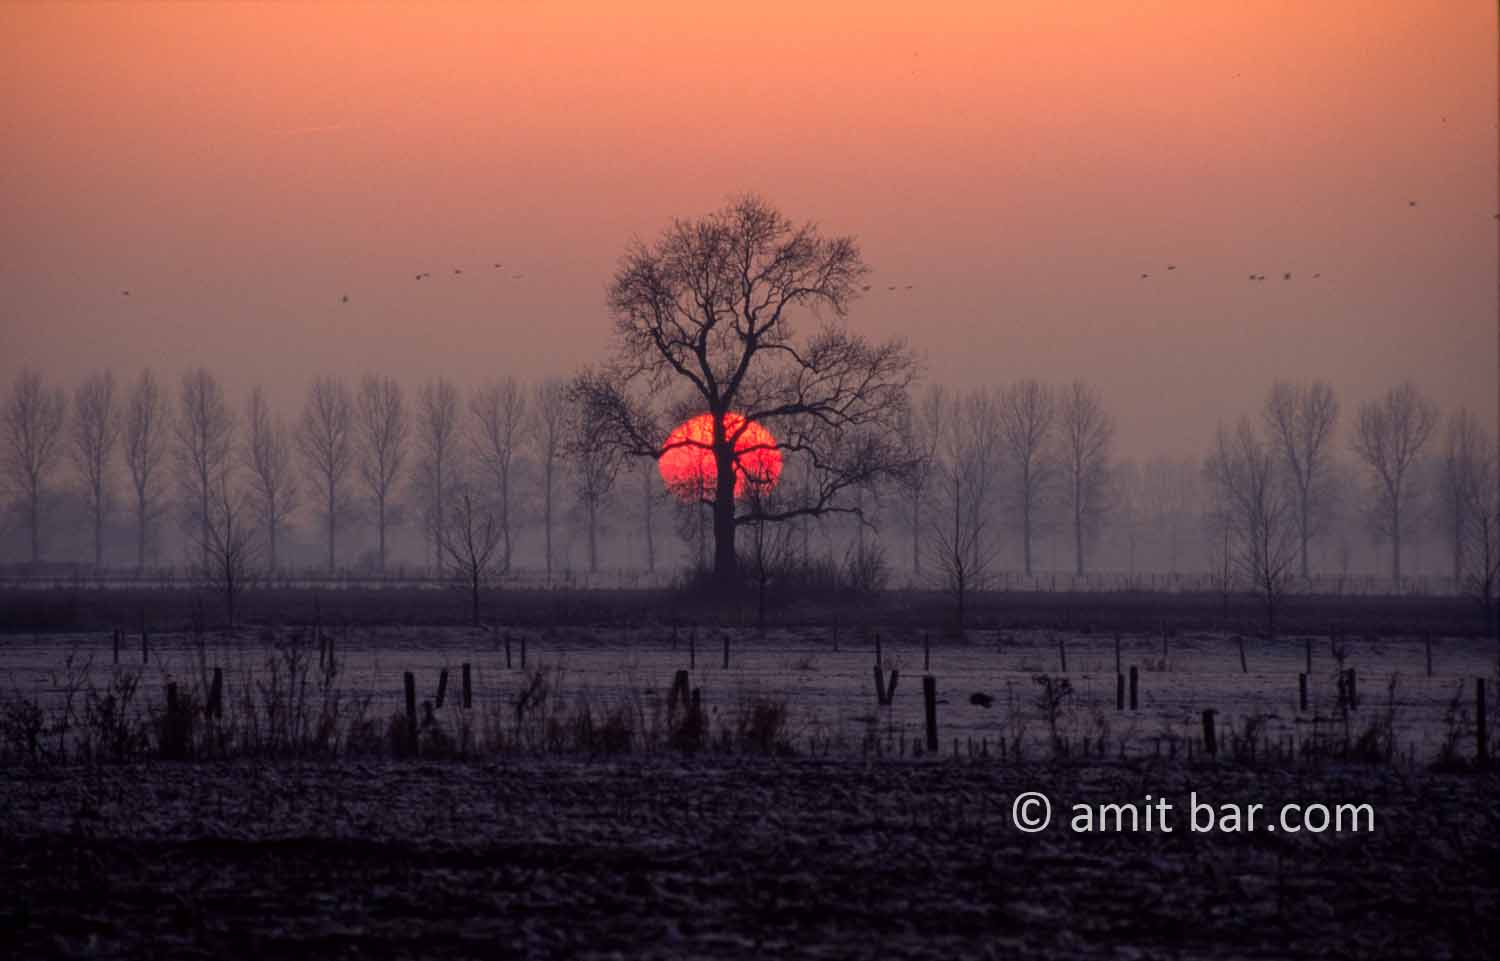 Sunset above frozen landscape at Vierakker, The Netherlands